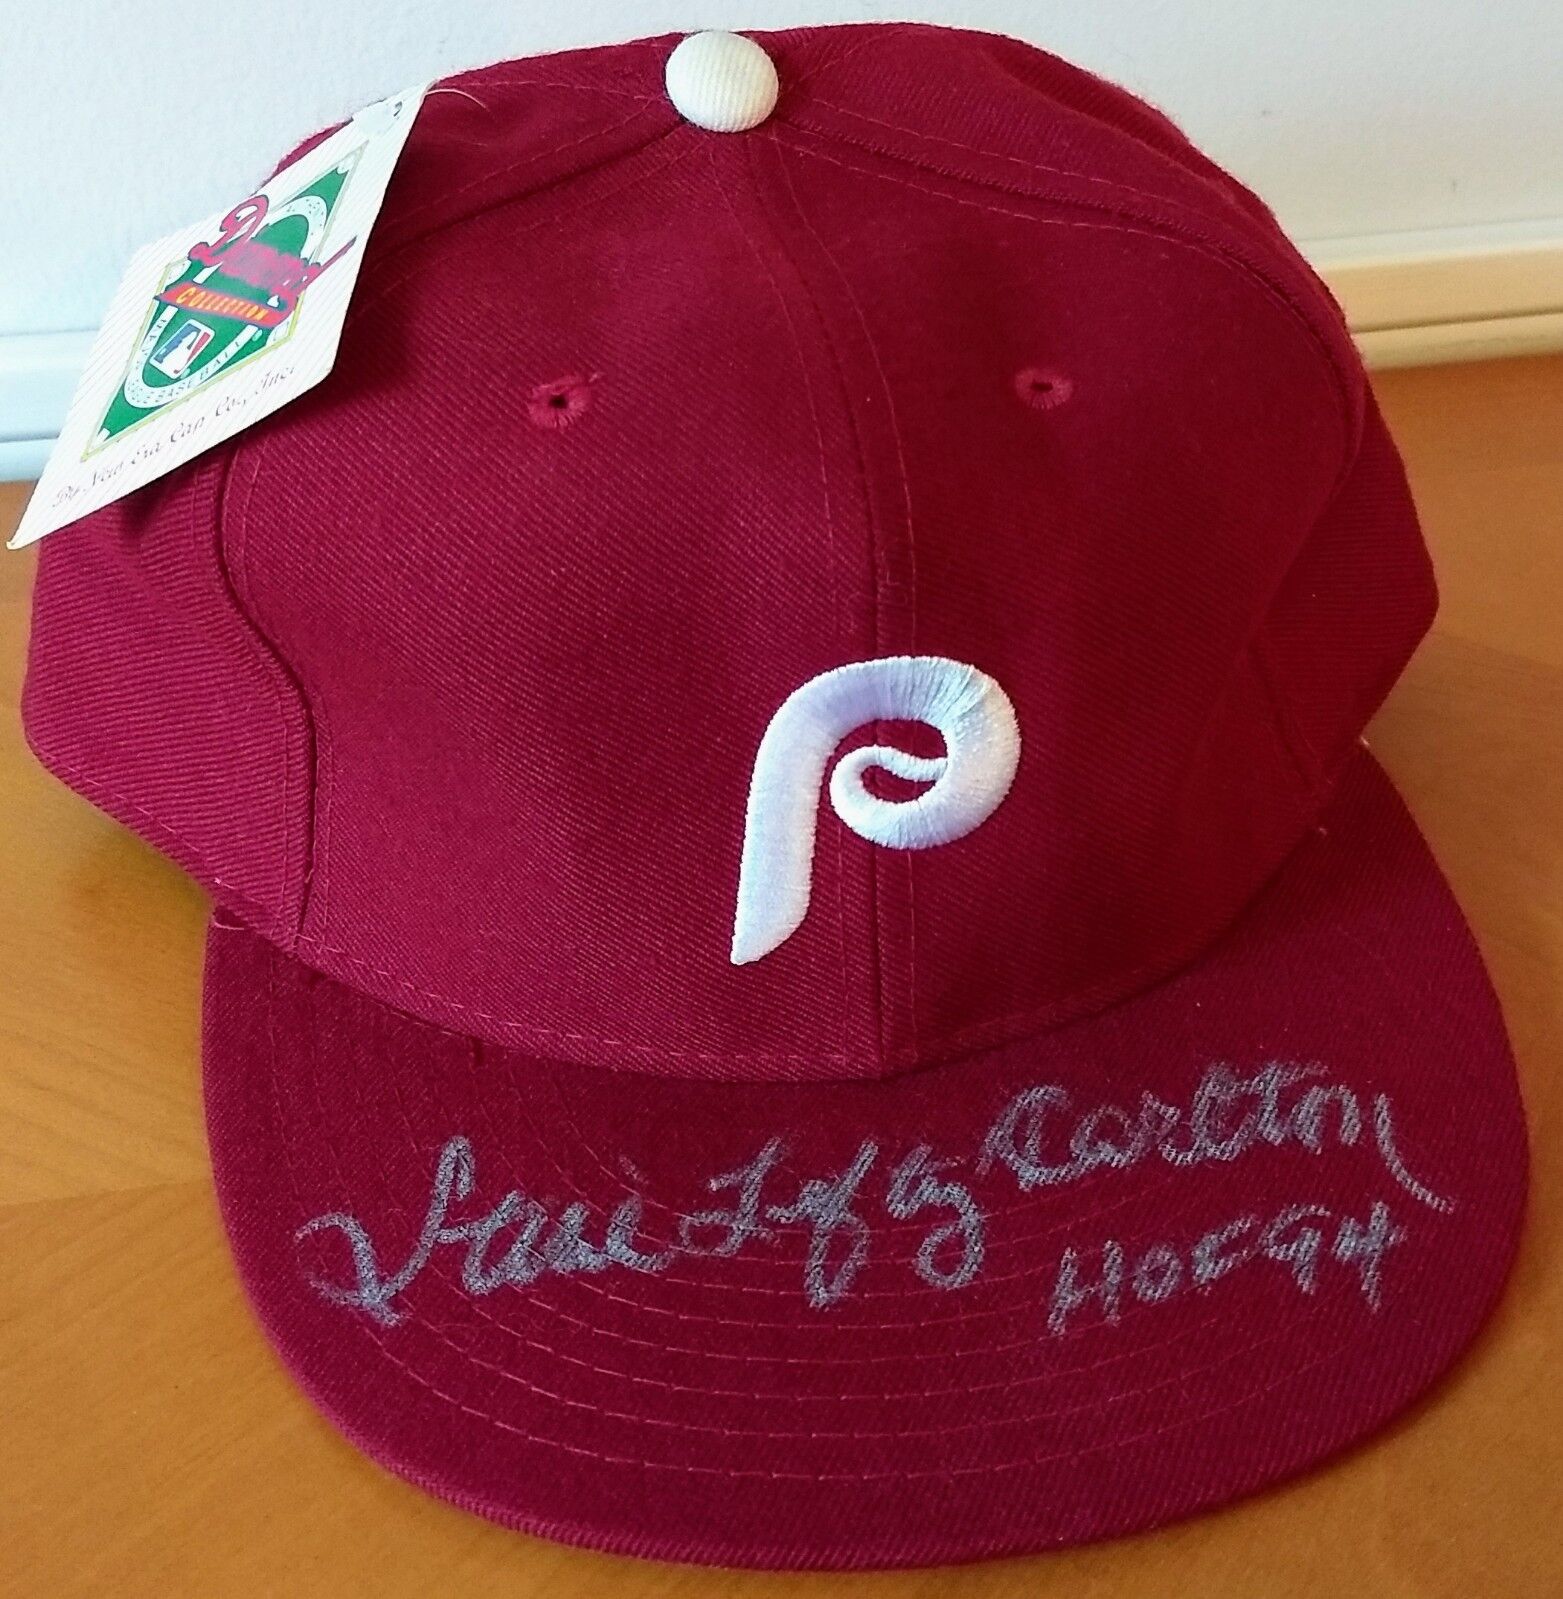 Steve Lefty Carlton HOF 94 Signed Phillies Baseball Hat Auto Rare Inscription